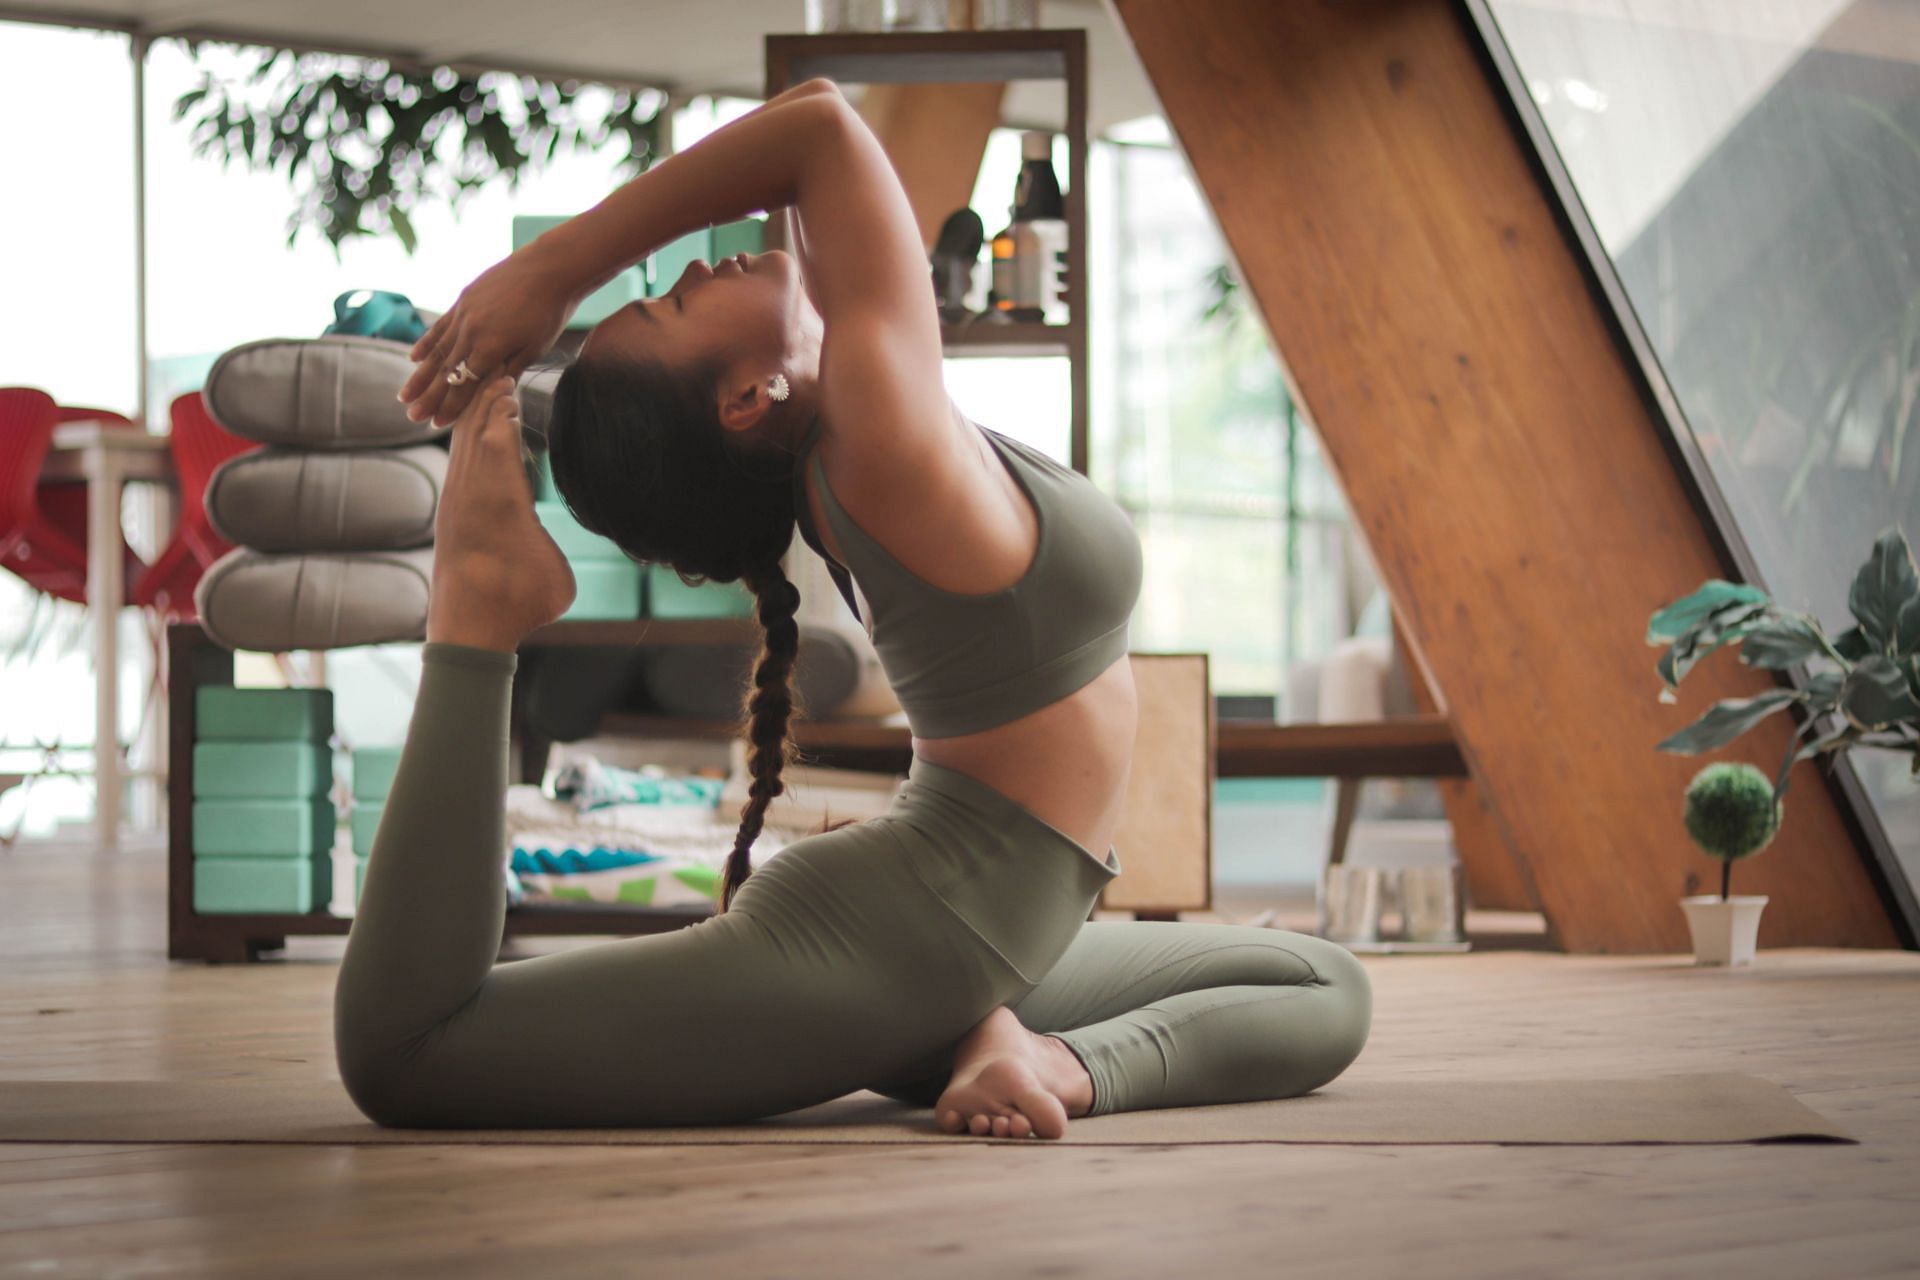 Effective intermediate yoga poses worth trying (Image via Unsplash / Carl Barcelo)